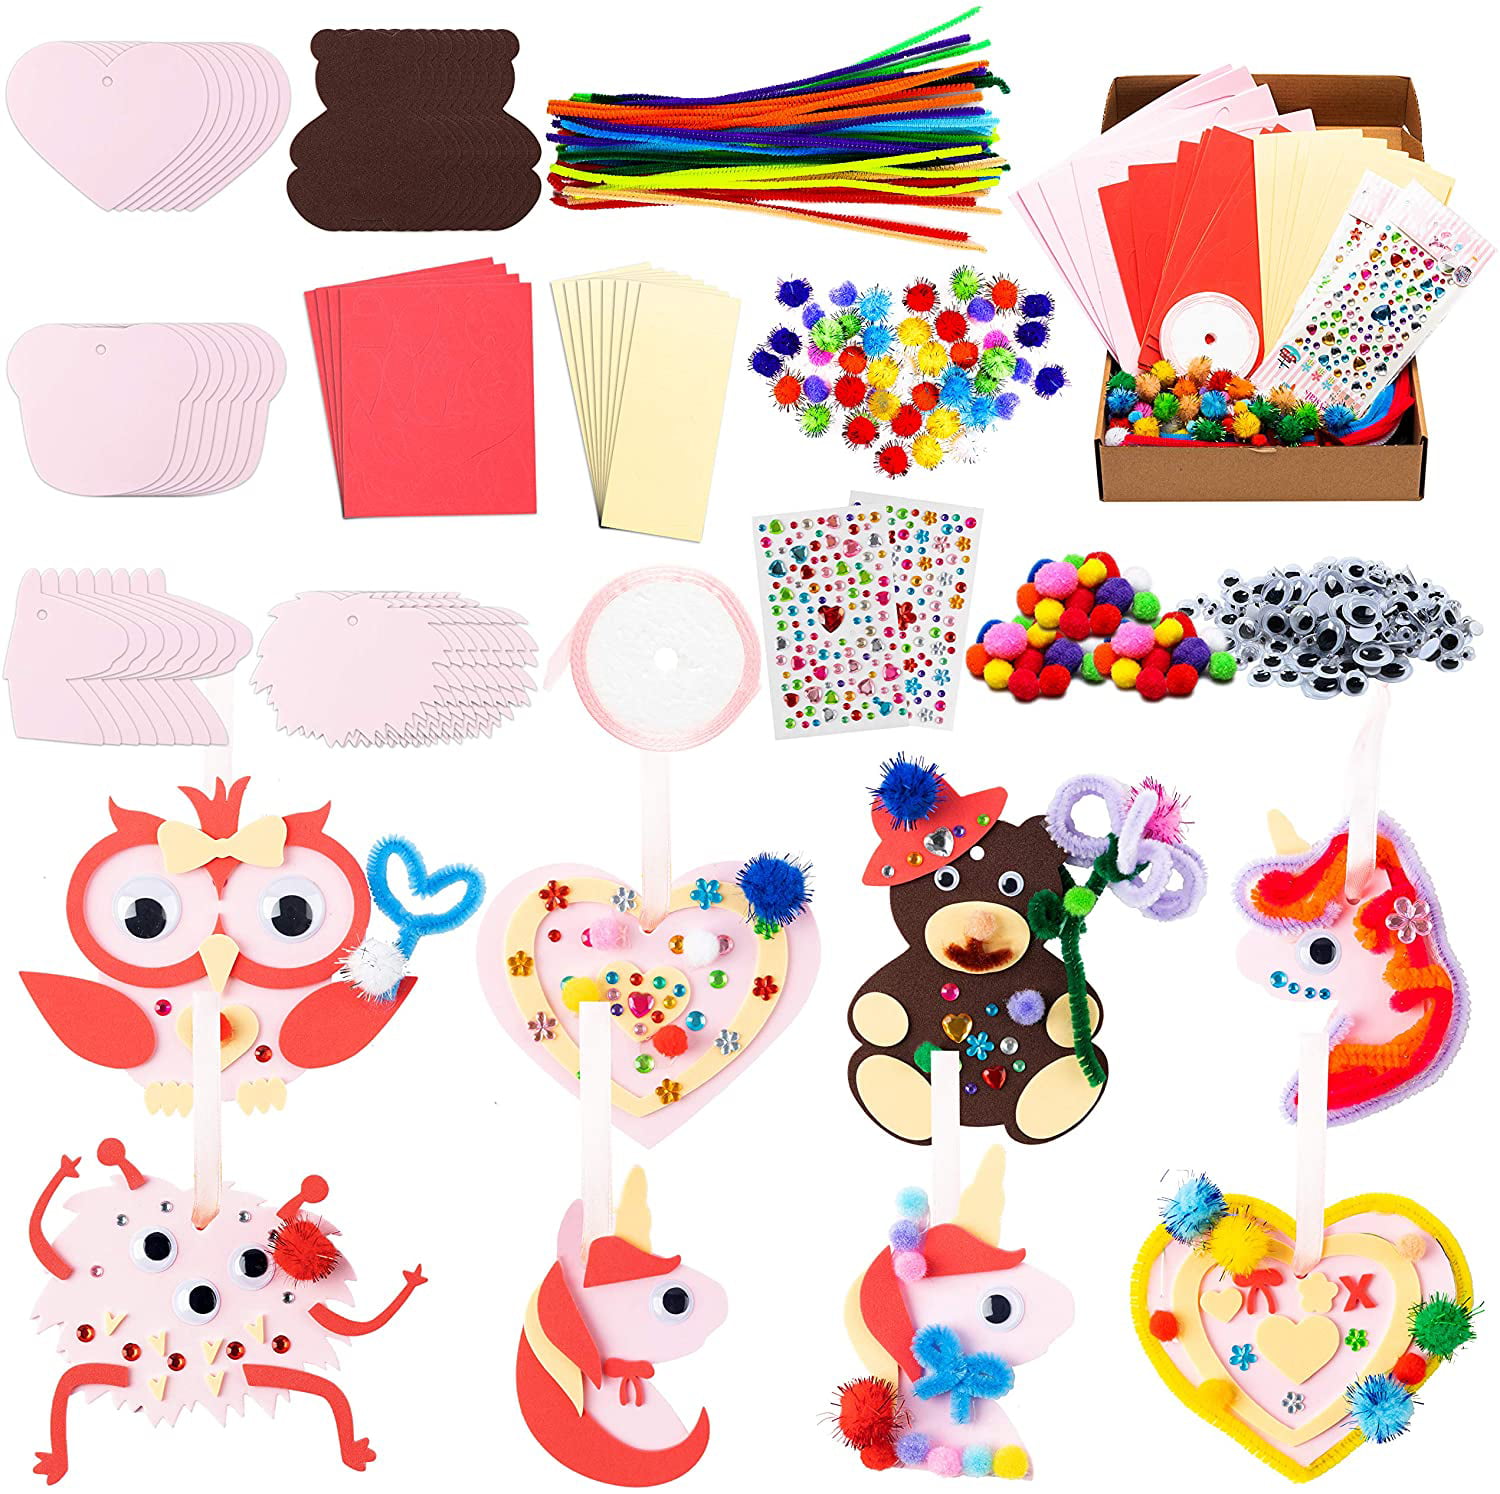 2 Cool Owl Cupcake Ornament Paper Kits Wiggle eyes New Craft Kits 